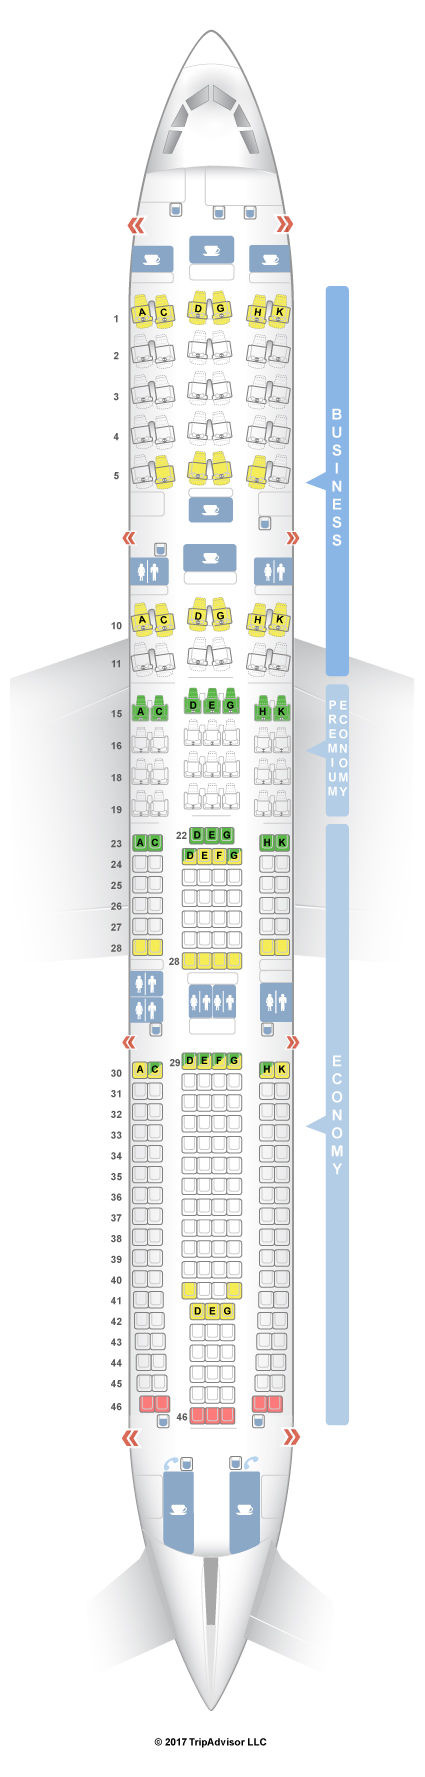 Lufthansa A330 200 Seat Map